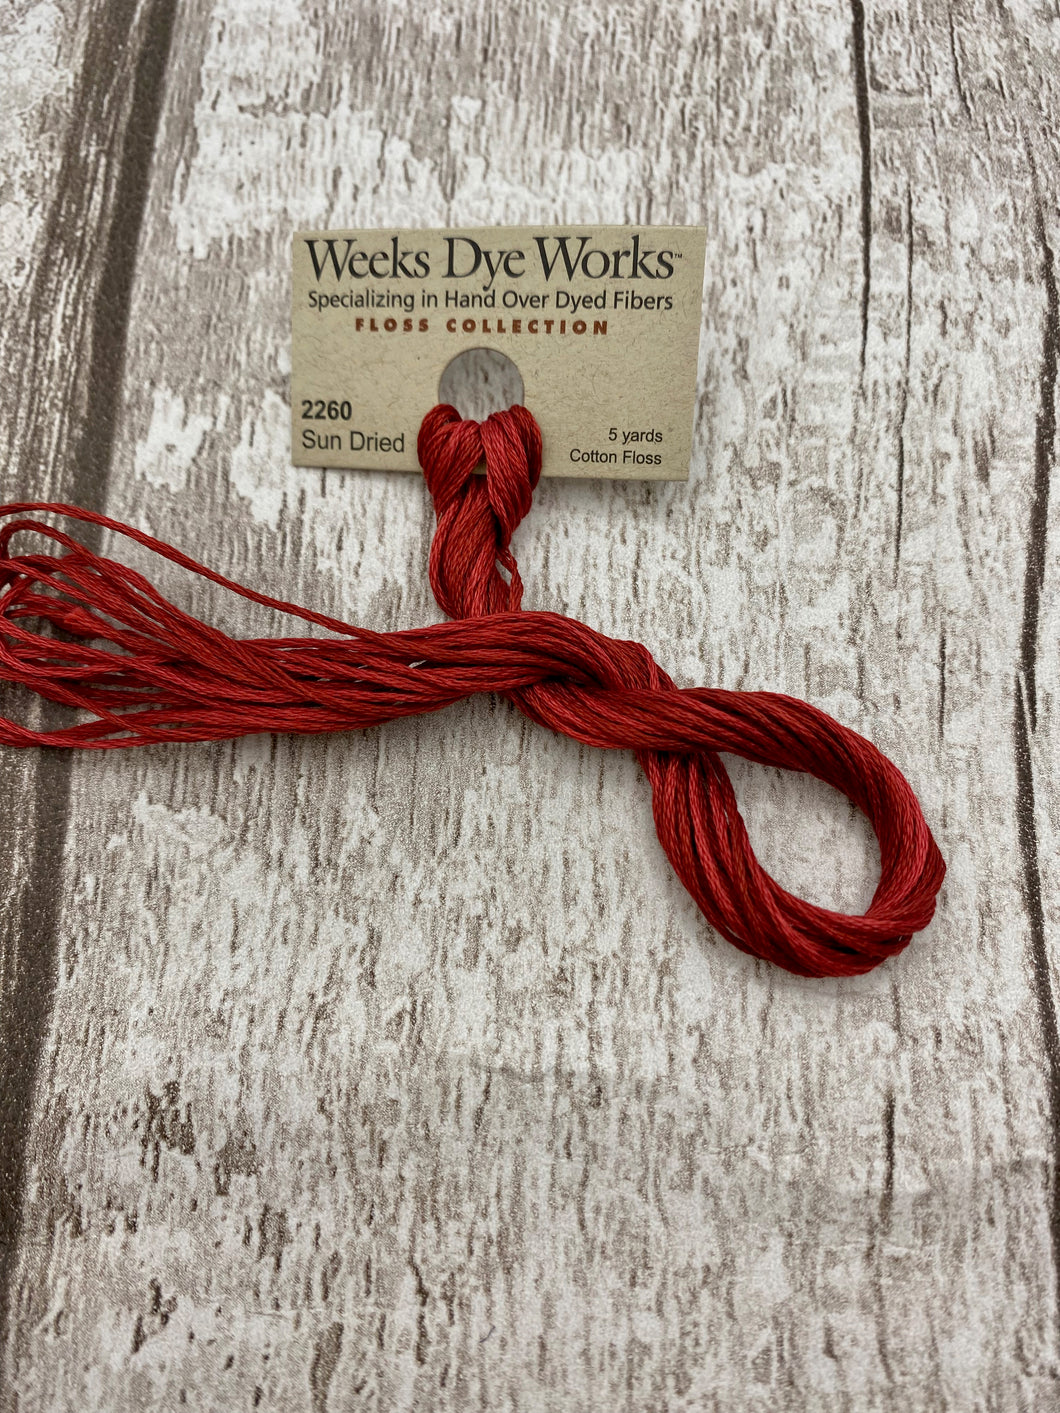 Sun Dried (#2260) Weeks Dye Works, 6-strand cotton floss